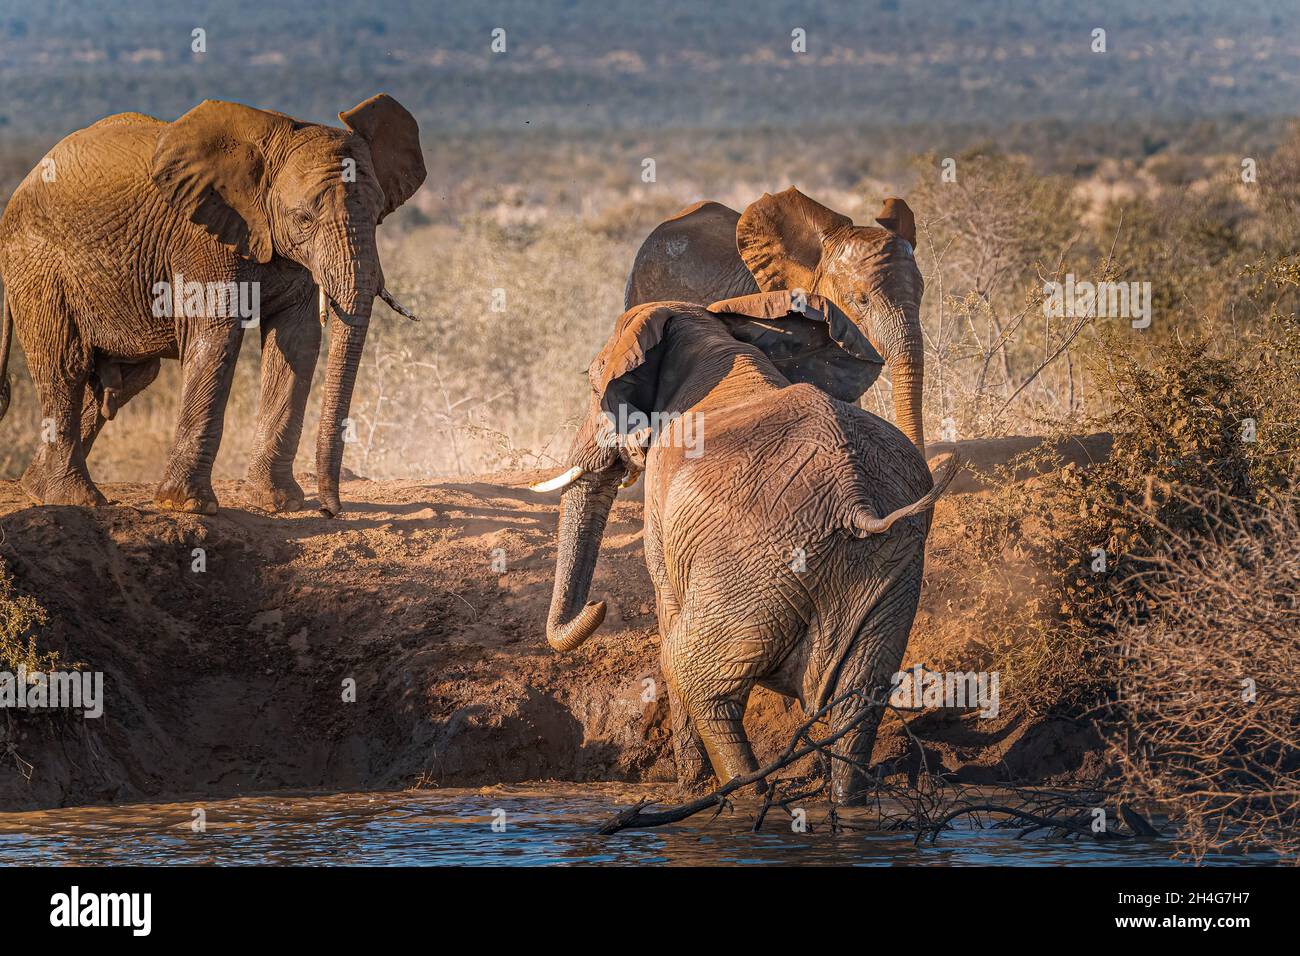 Group of elephants walking near a pond Stock Photo